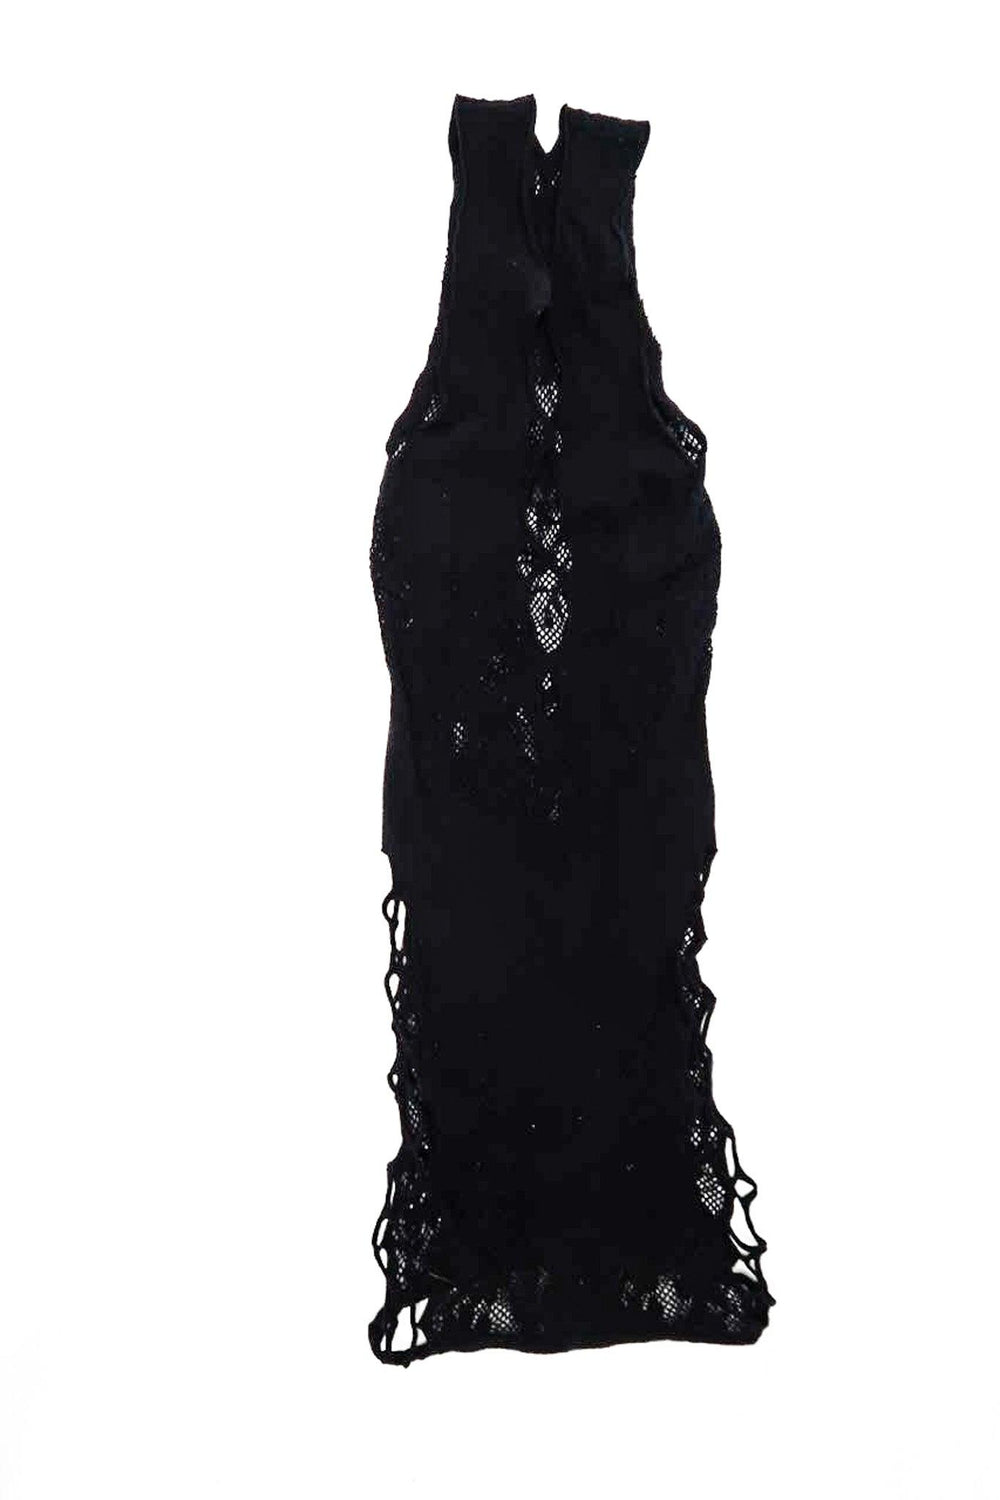 Savannah Bond Black Fishnet Mesh Dress - FANS UTOPIA